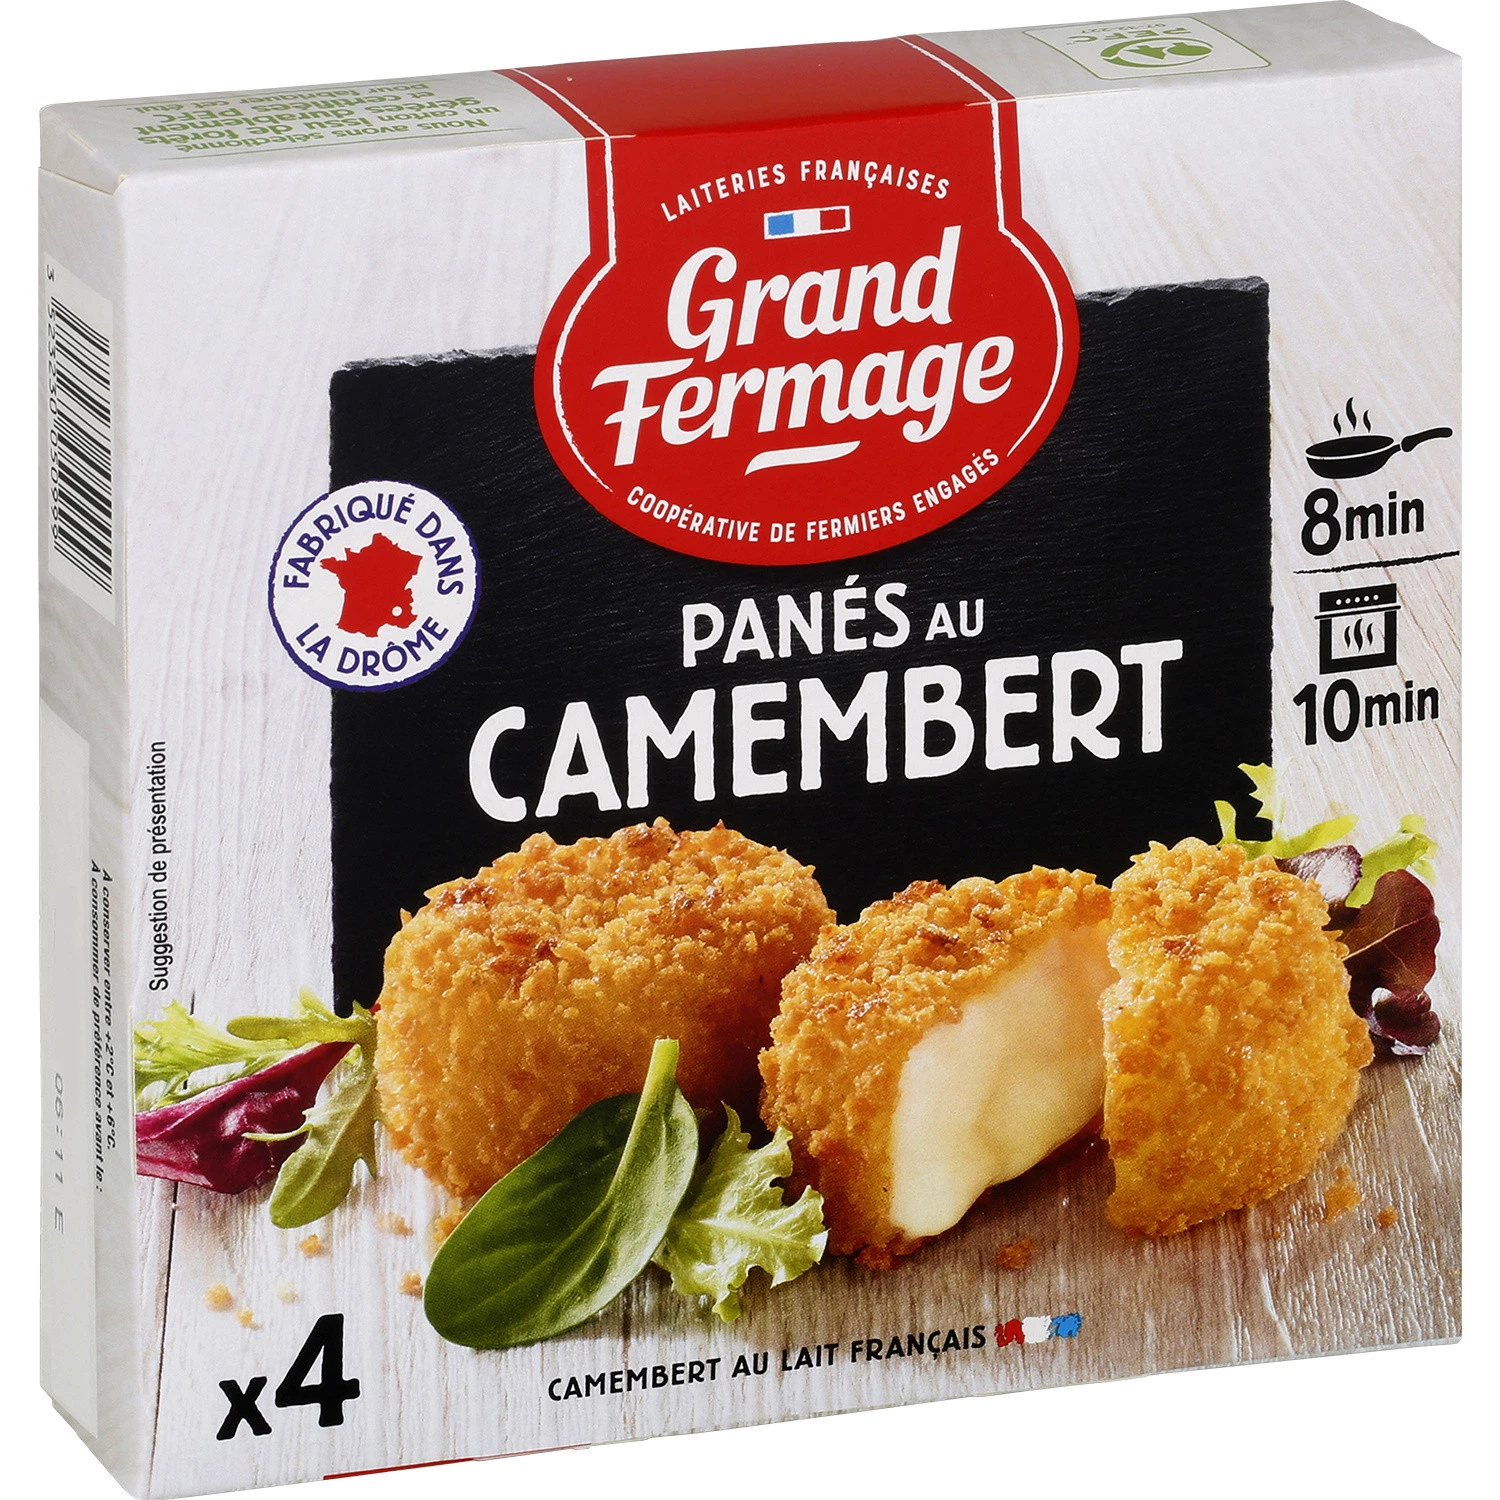 Grand Fermage Breaded camembert x4 100g